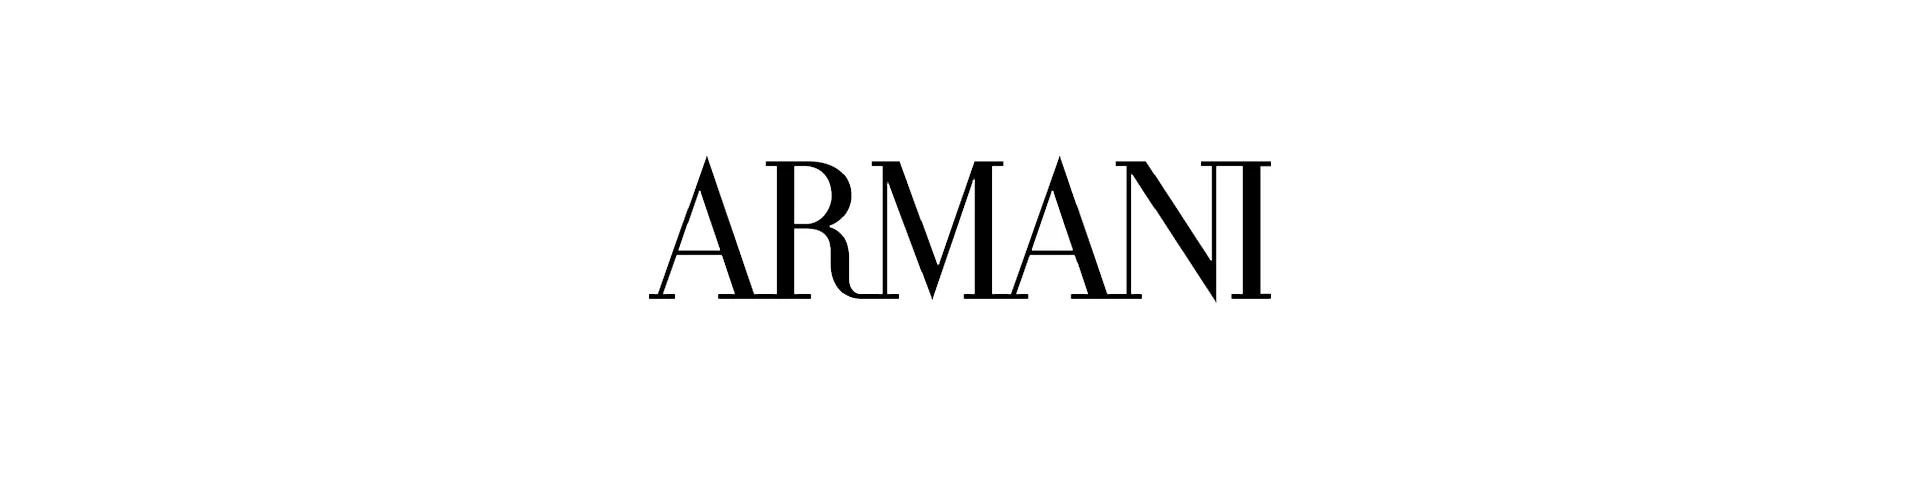 Giorgio Armani Perfume for Women | Great Offers on Perfume